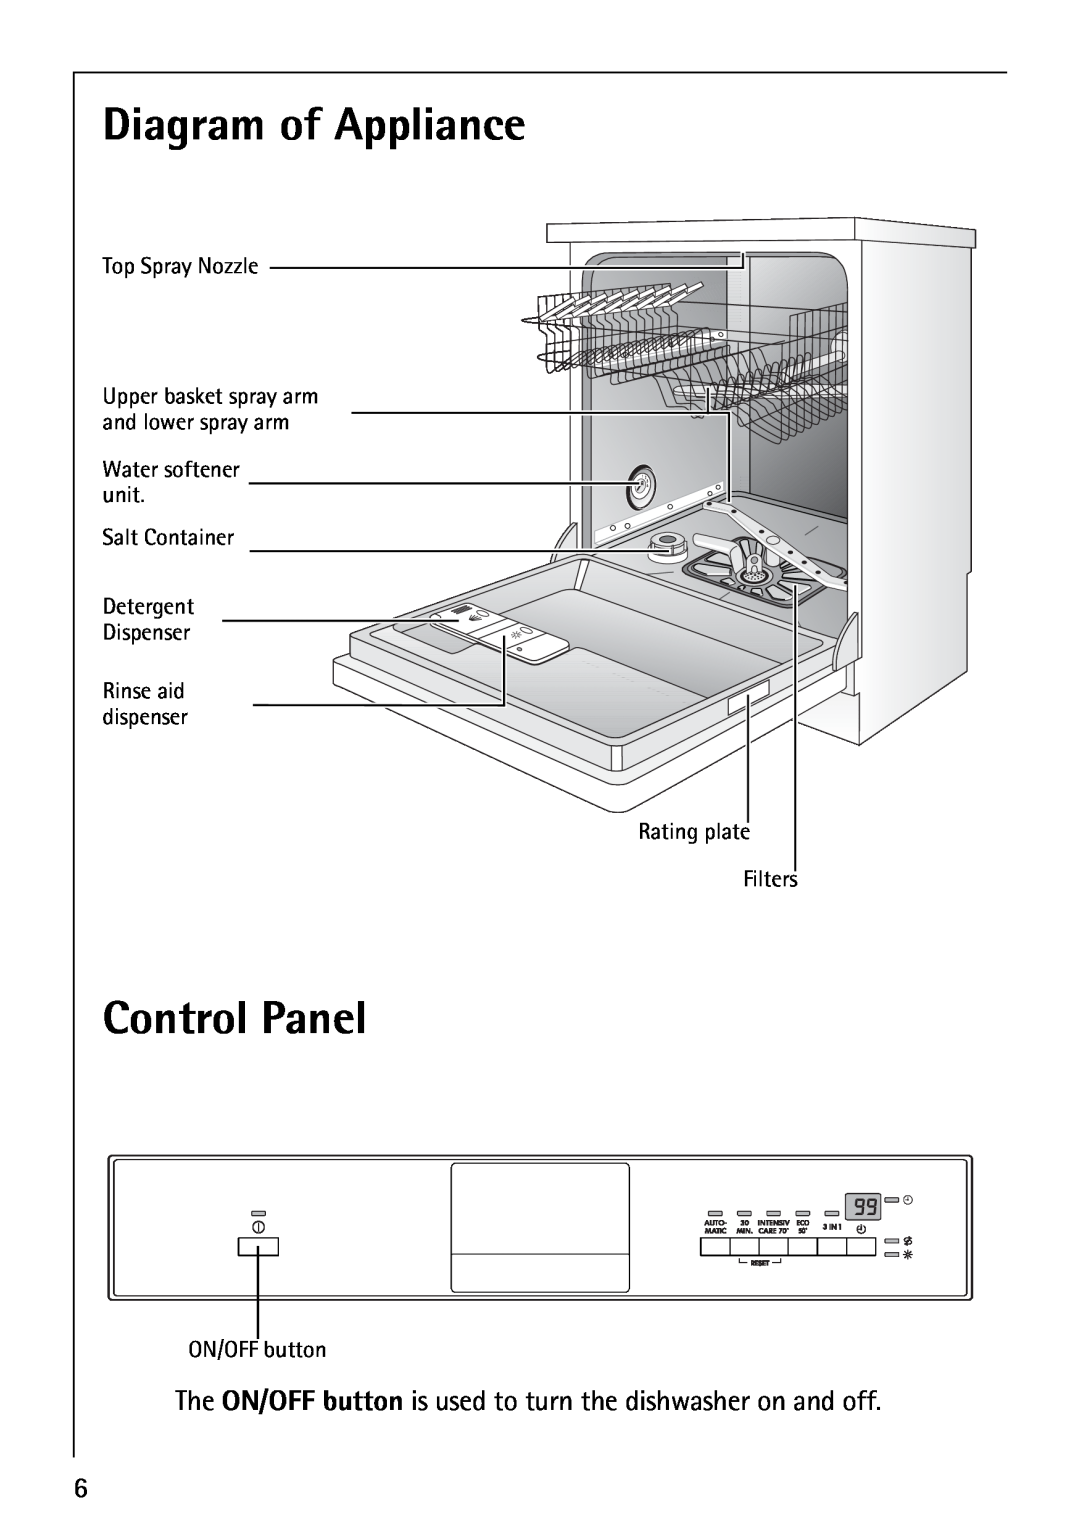 AEG 40850 manual Diagram of Appliance, Control Panel 